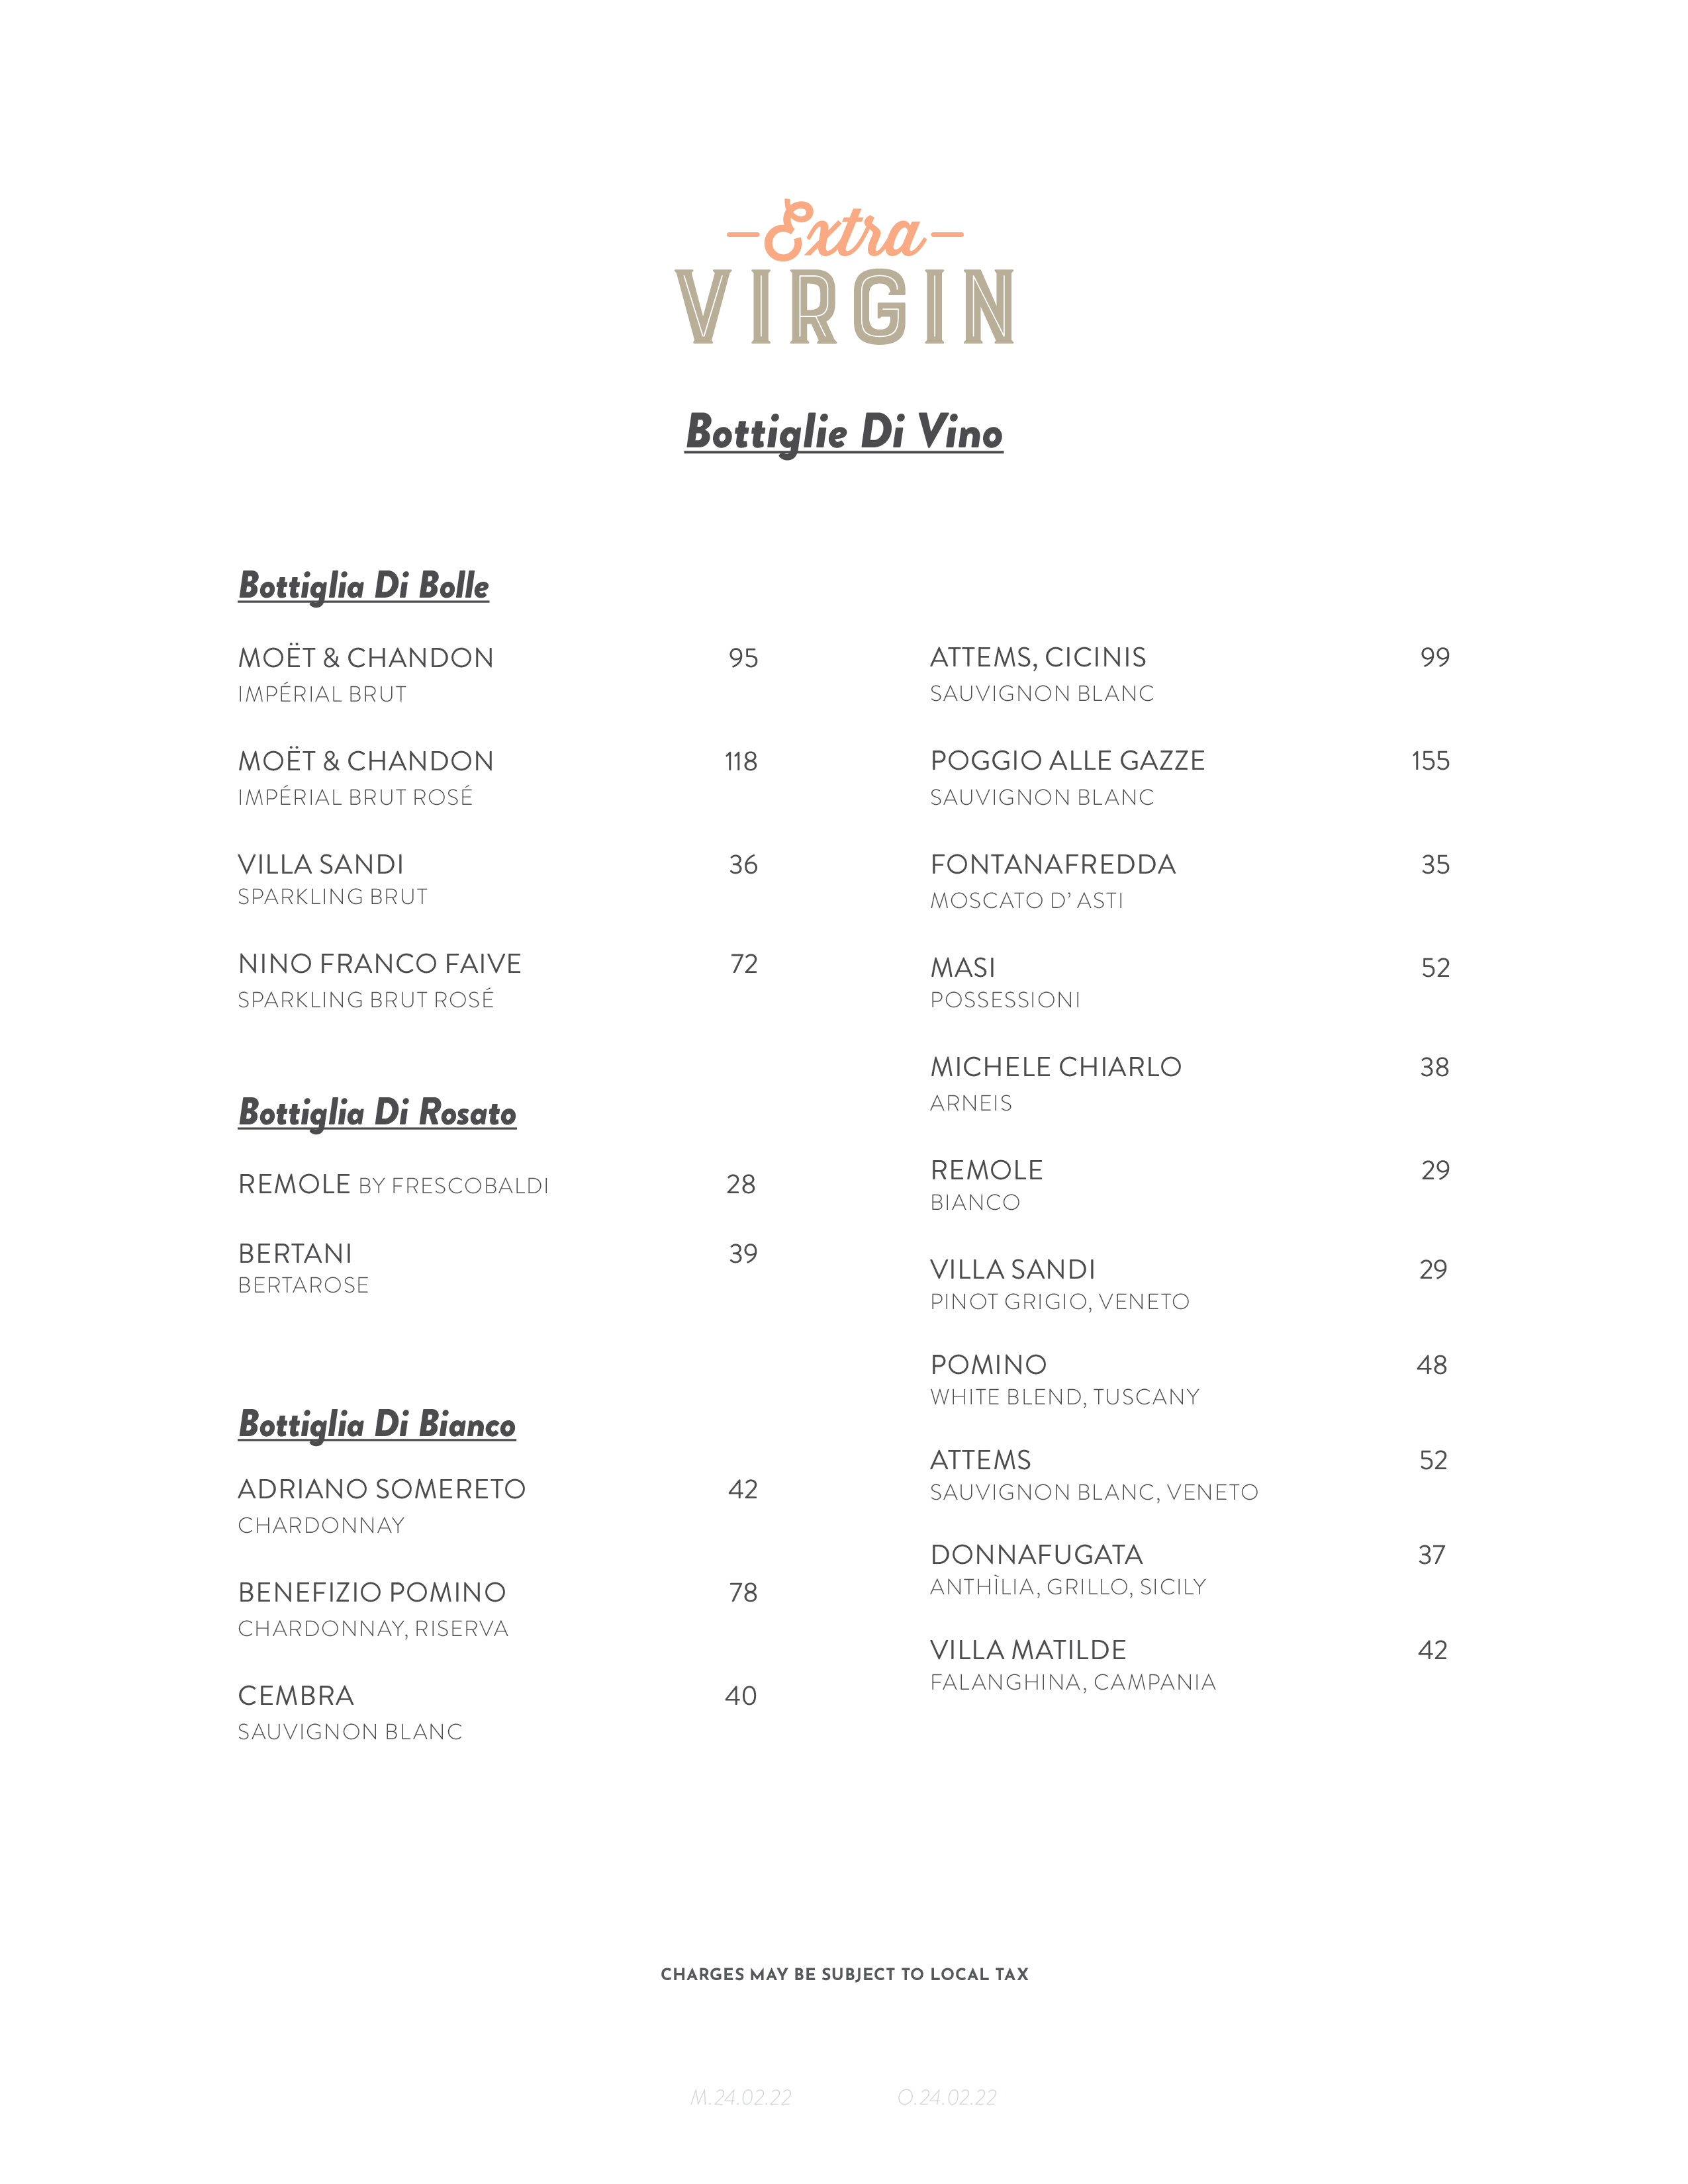 virgin voyages restaurant menu